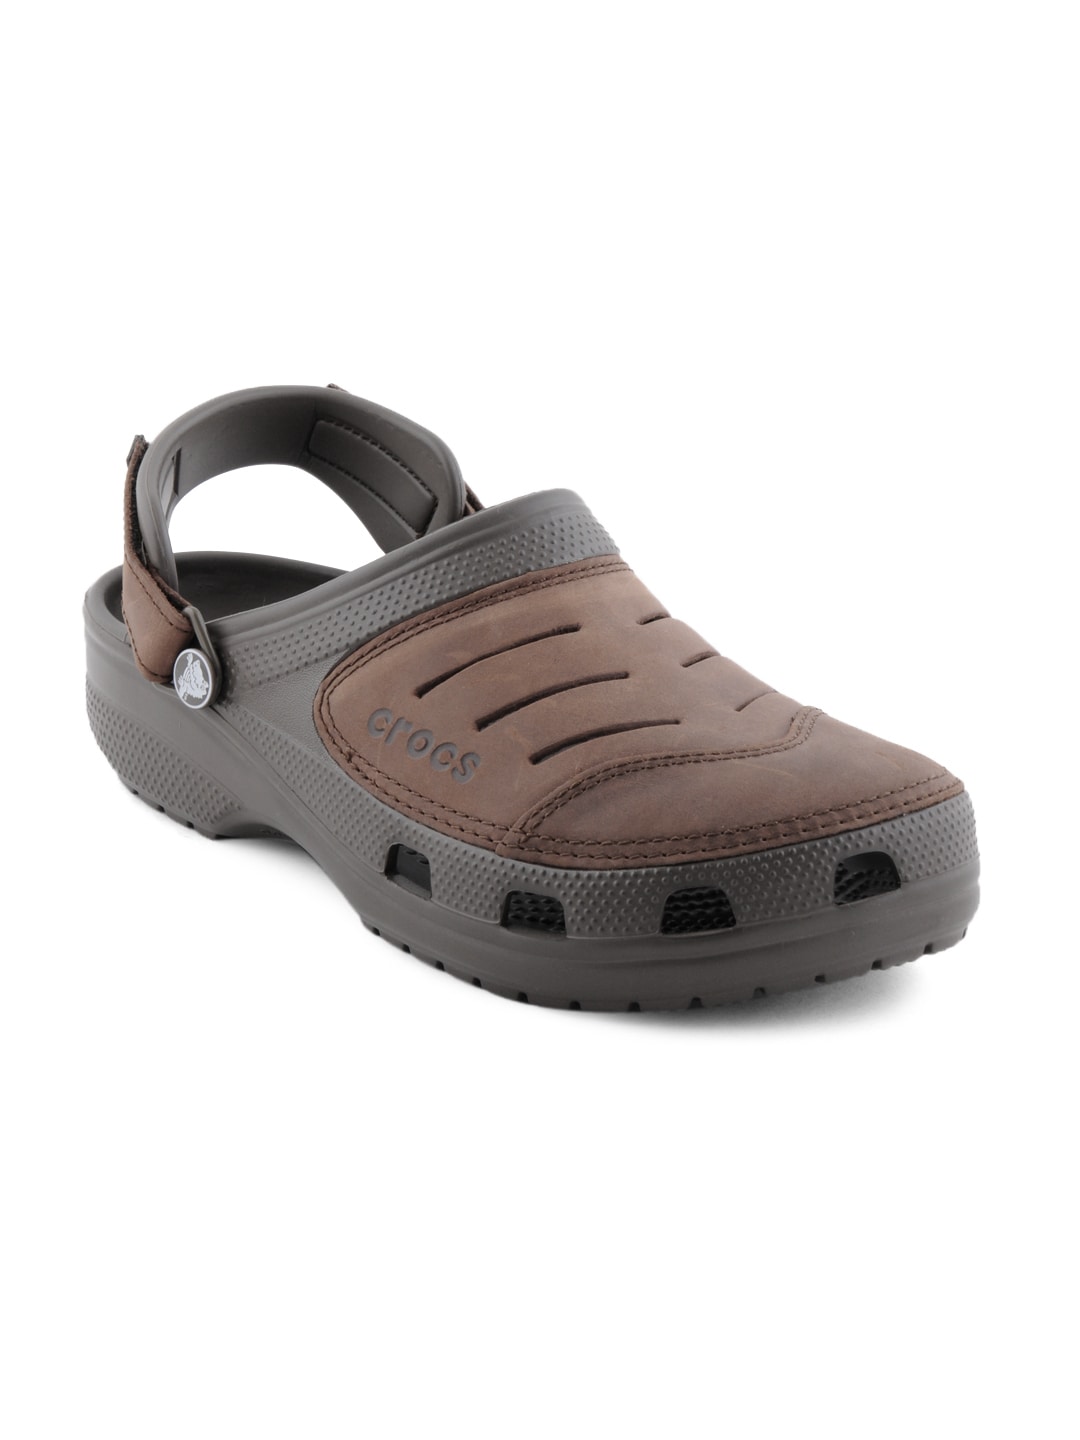 Crocs Men Brown Yukon Sandals